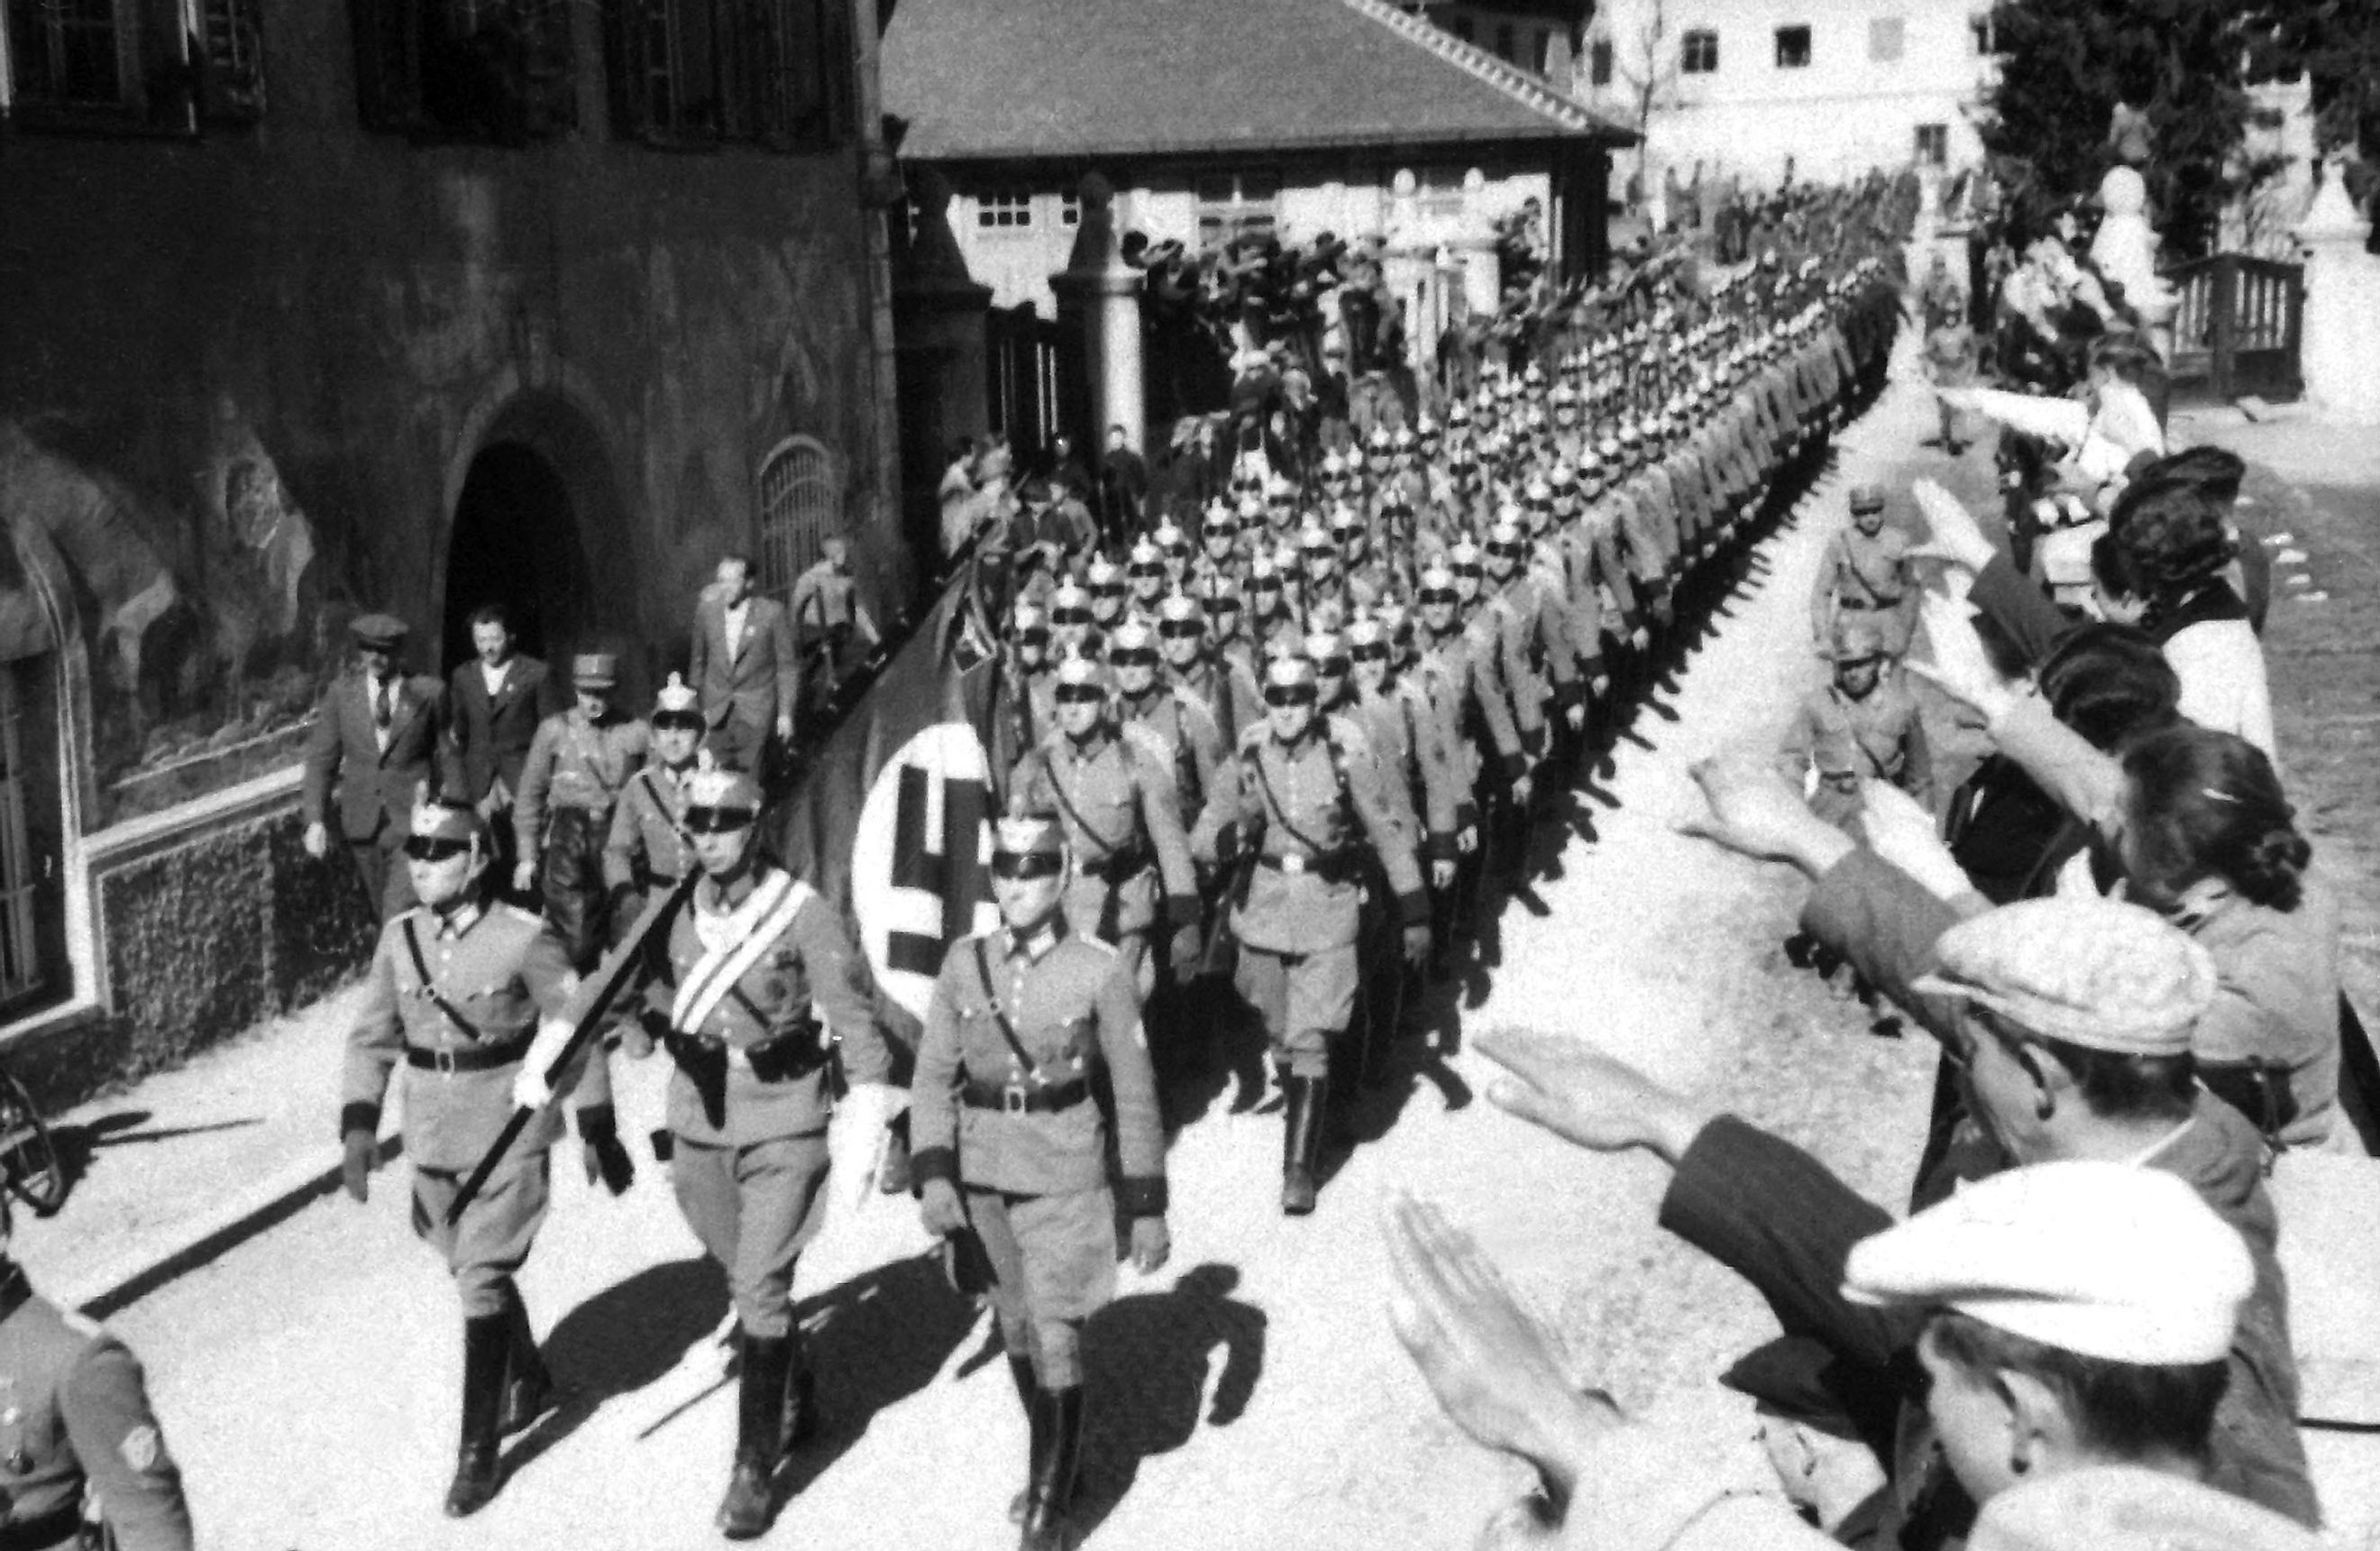 Anschluss: Germany Annexes Austria - WorldAtlas